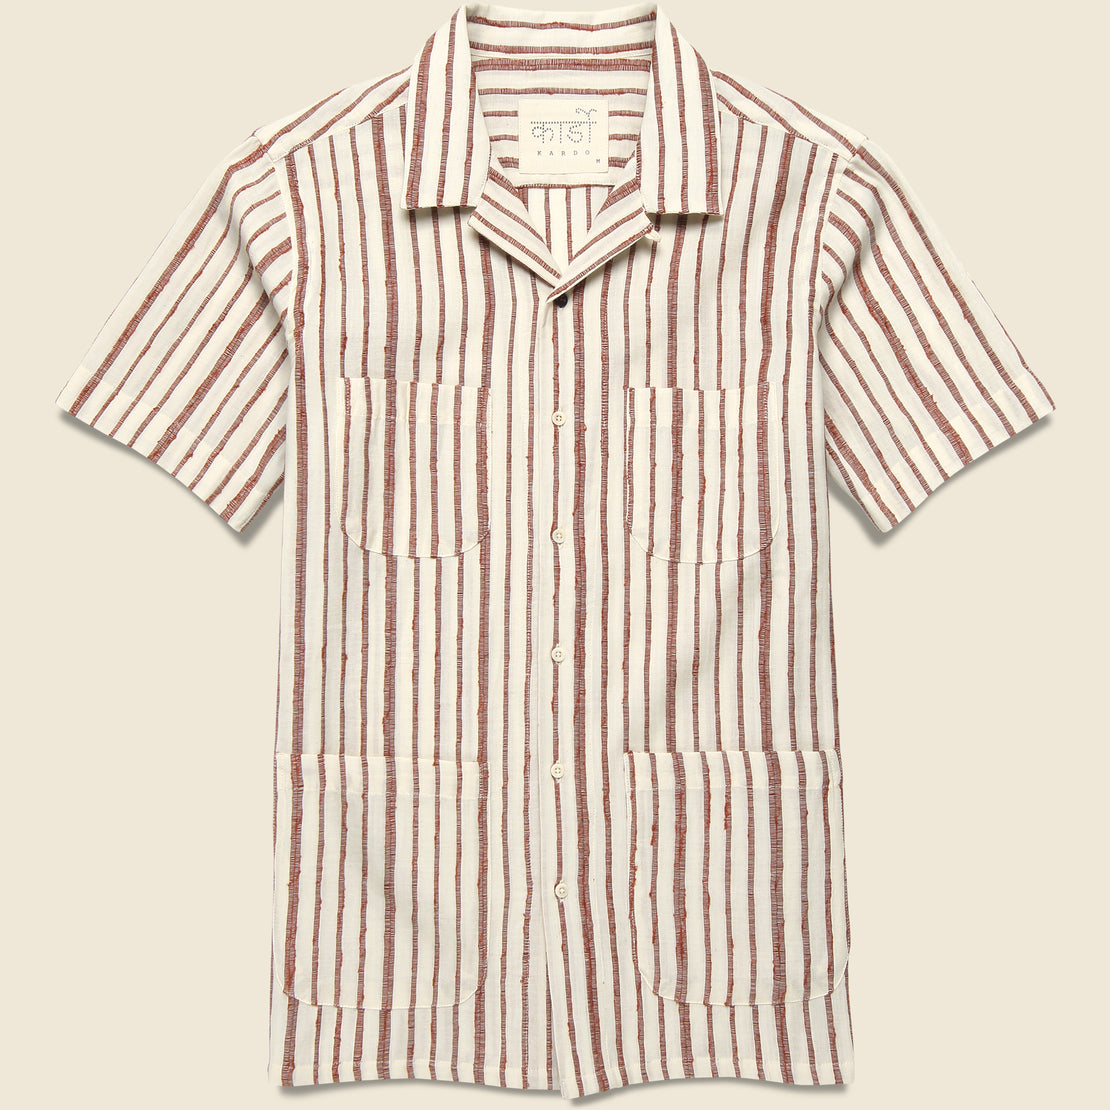 Kardo Handwoven Stripe Shirt - Brick